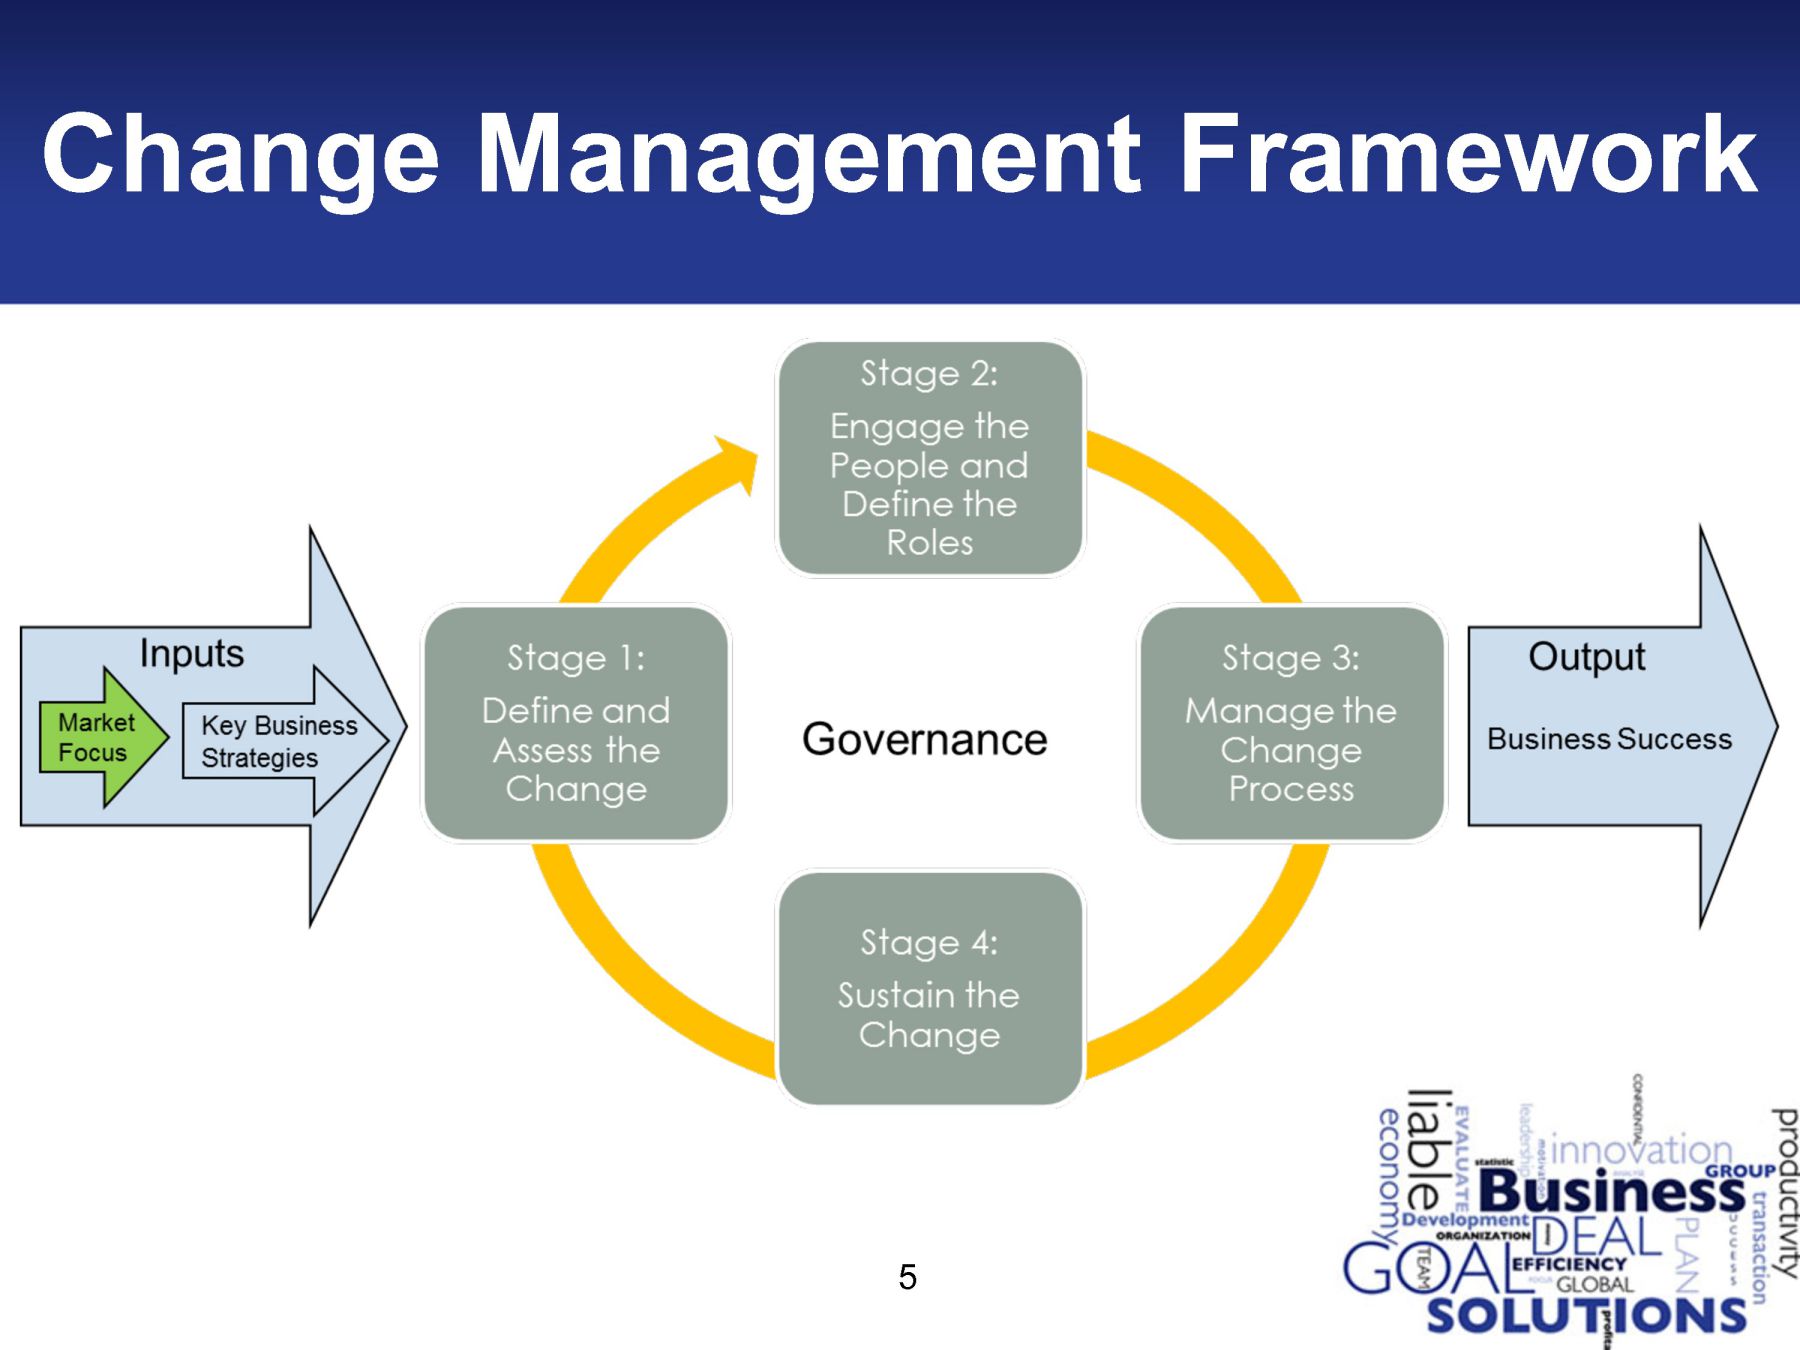 Supports framework. Фреймворк для управления изменениями. Управление изменениями менеджмент. Framework управление изменениями. Управление изменениями ITIL.